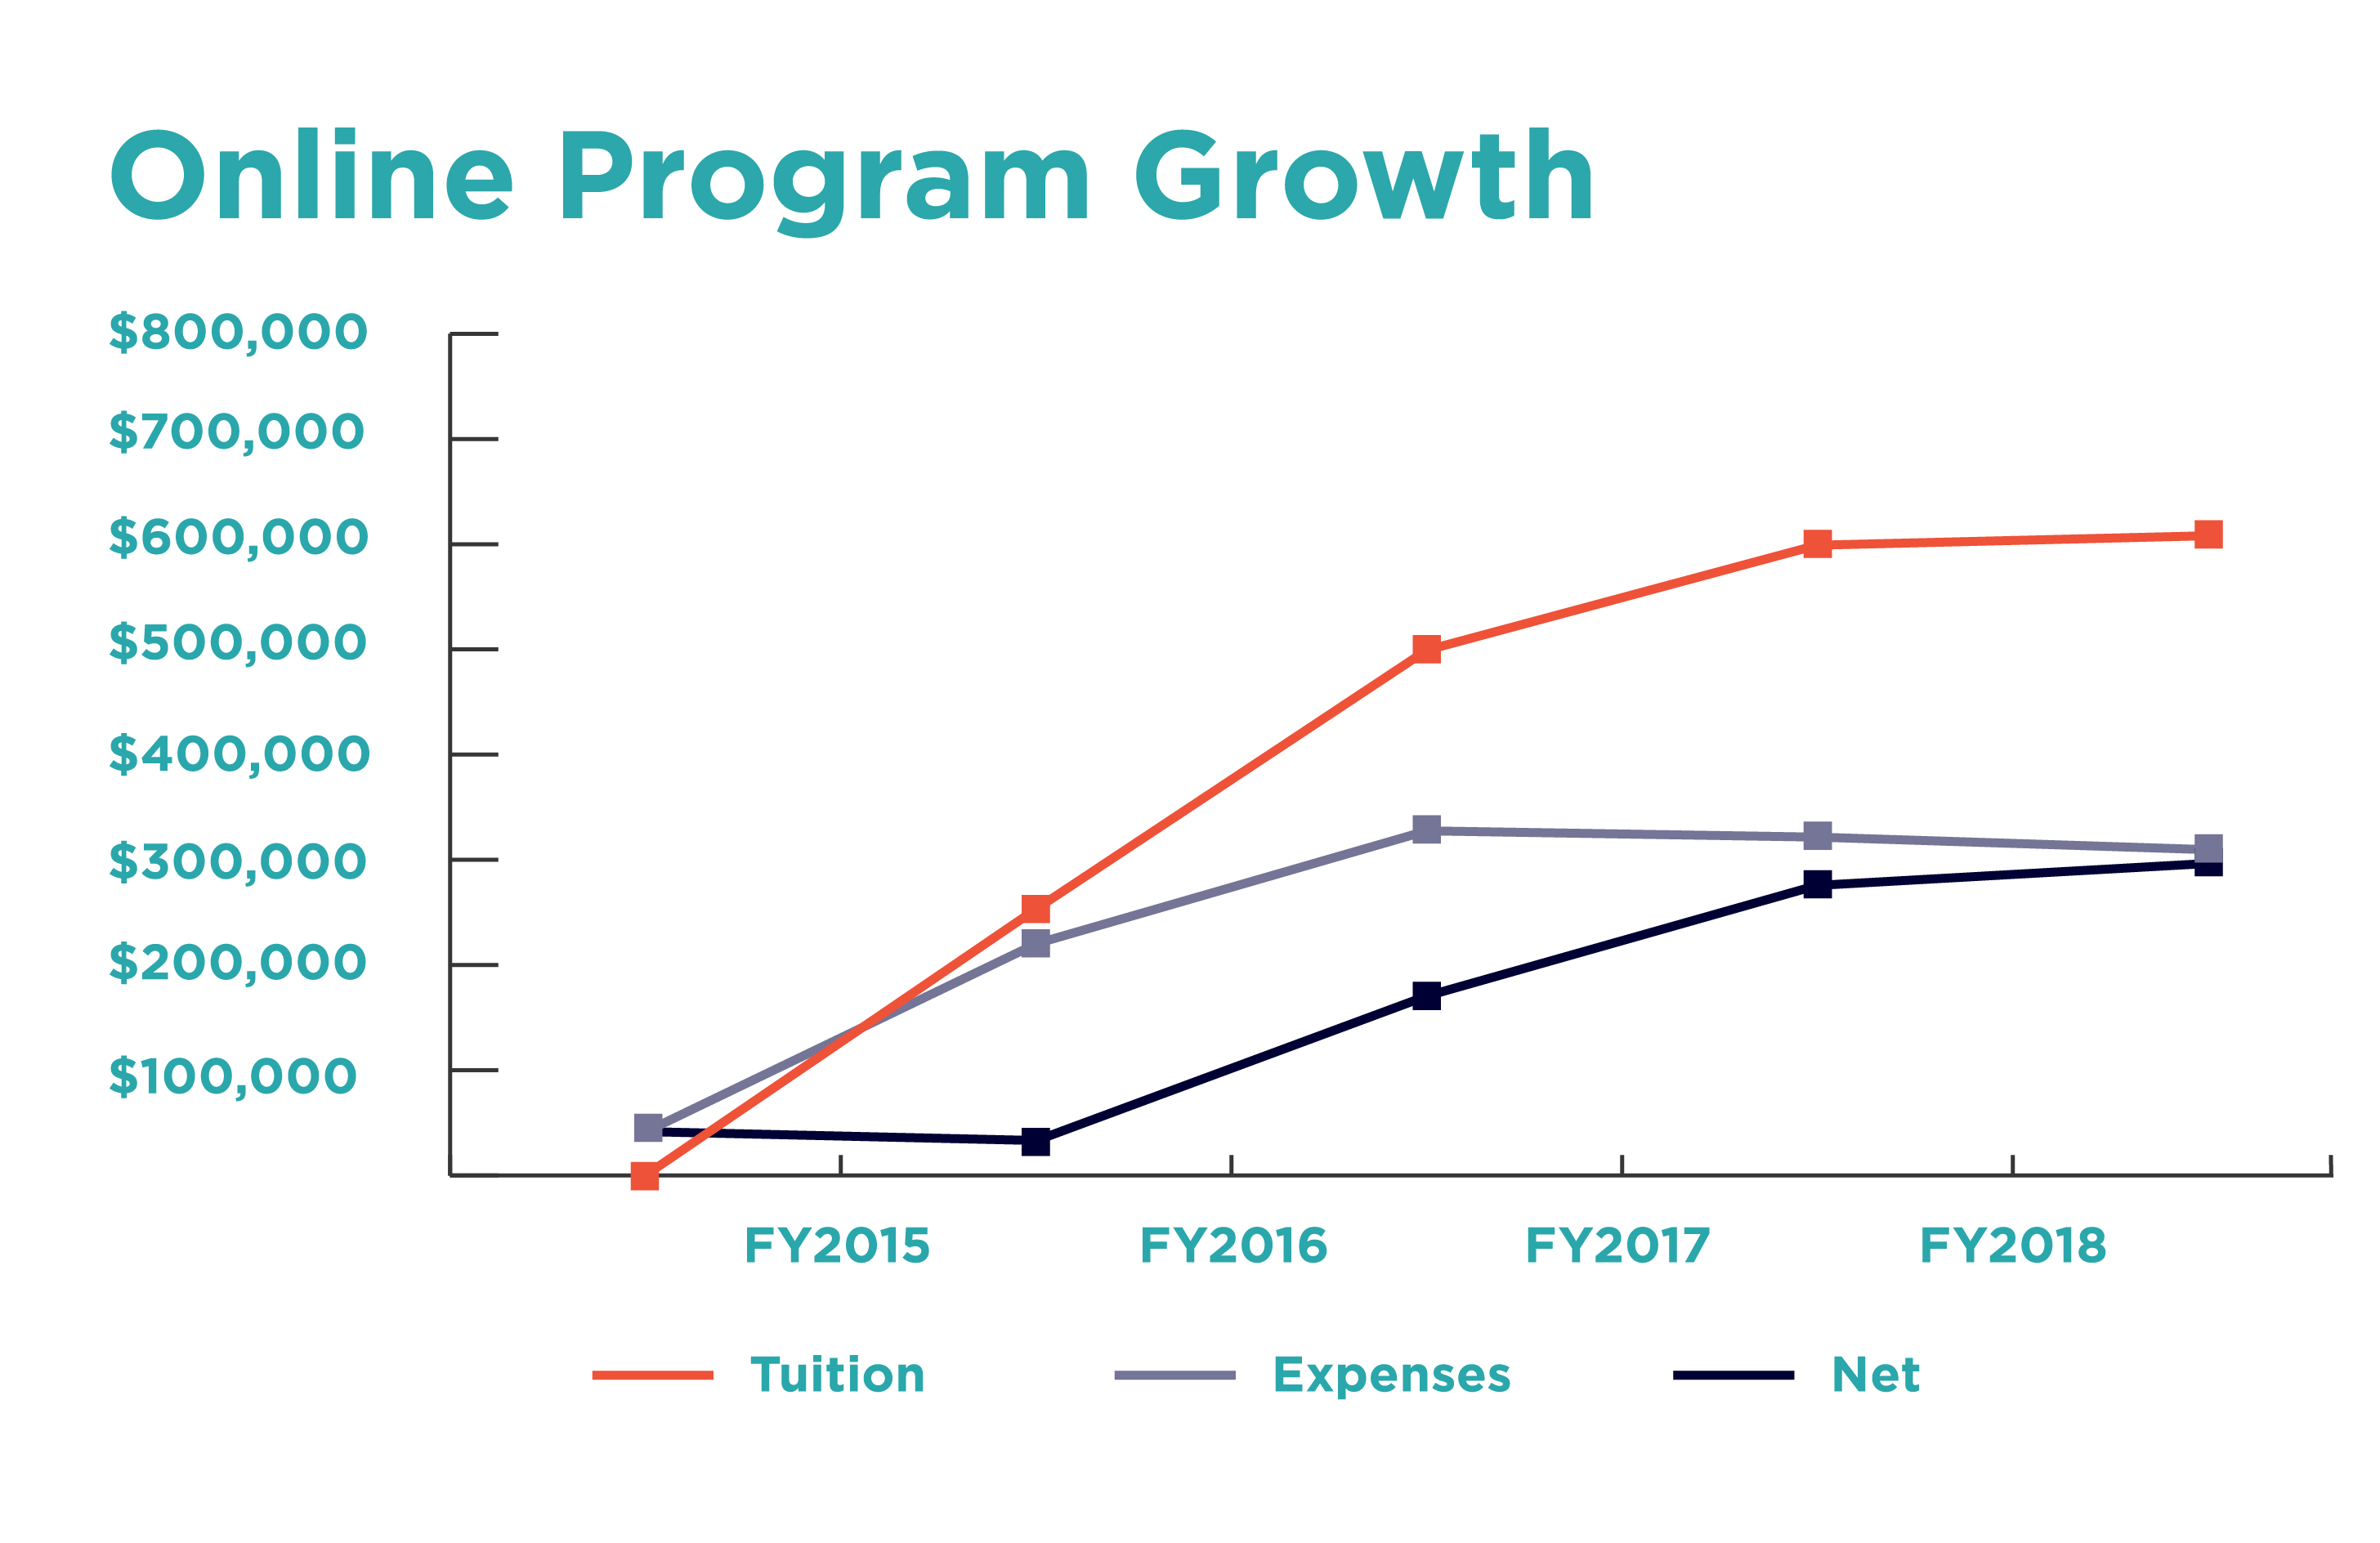 Online Program Growth Line Graph